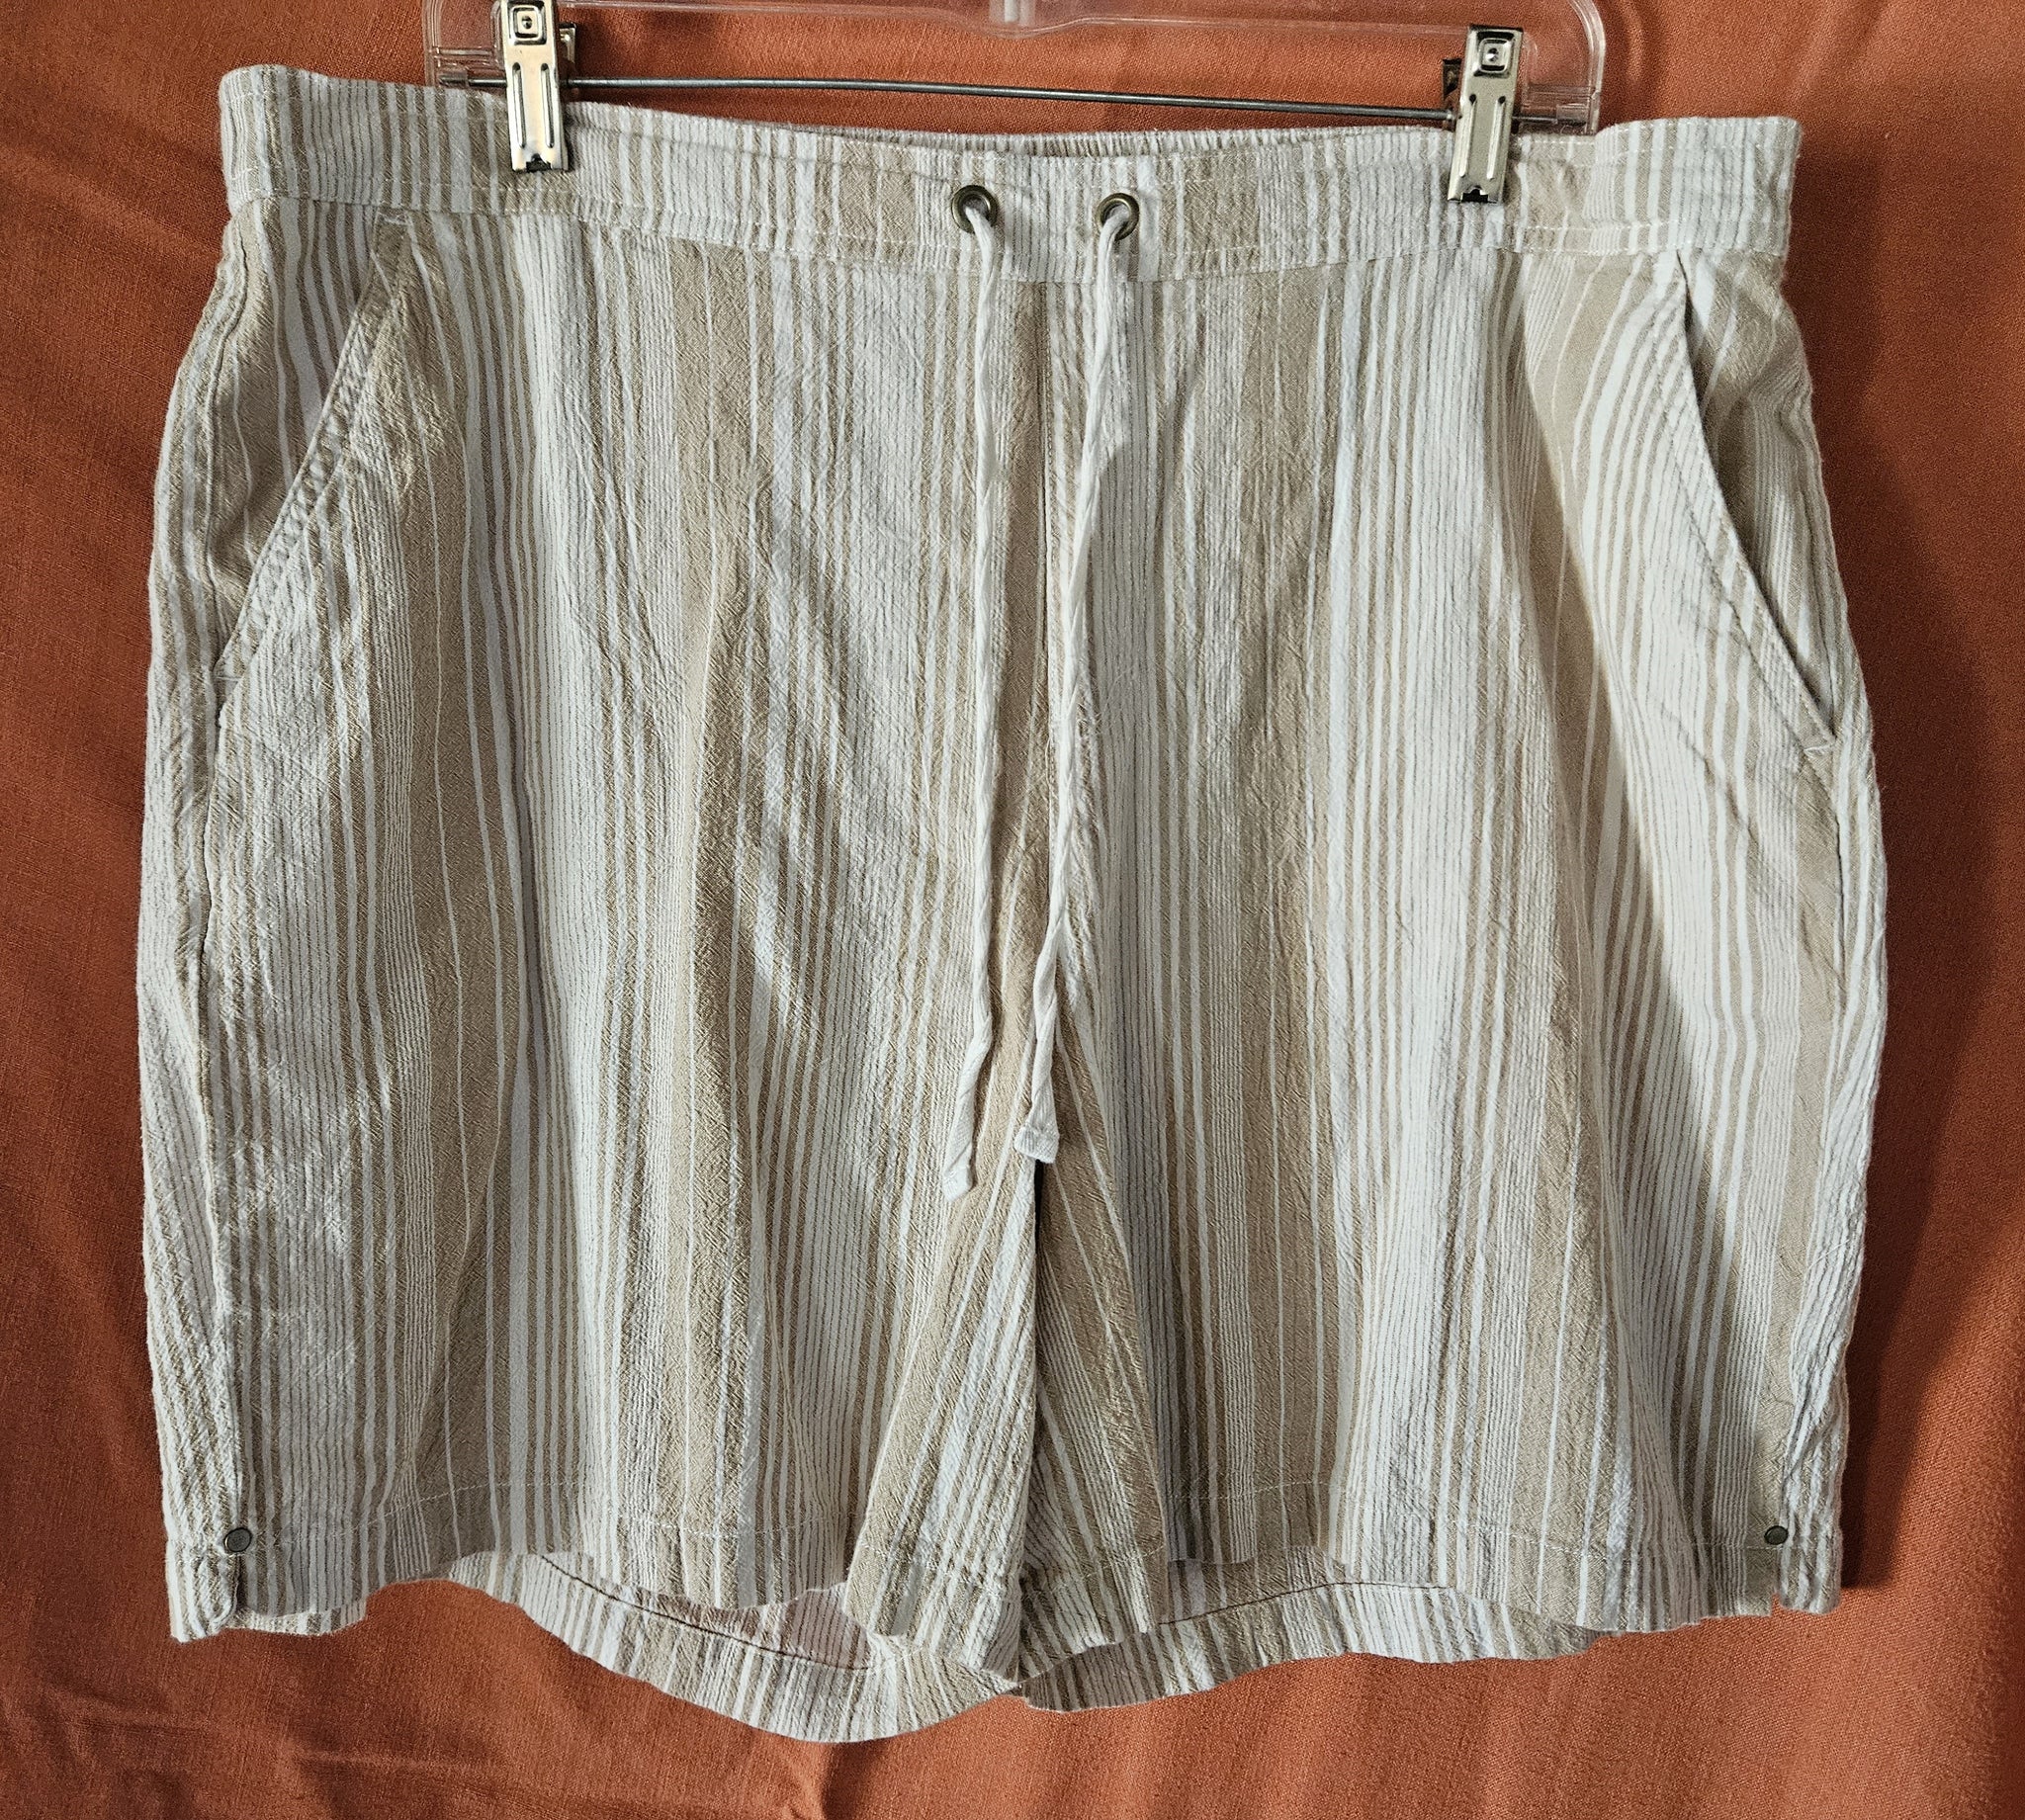 XXL CROFT & BARROW Tan & Cream Striped Drawstring Shorts